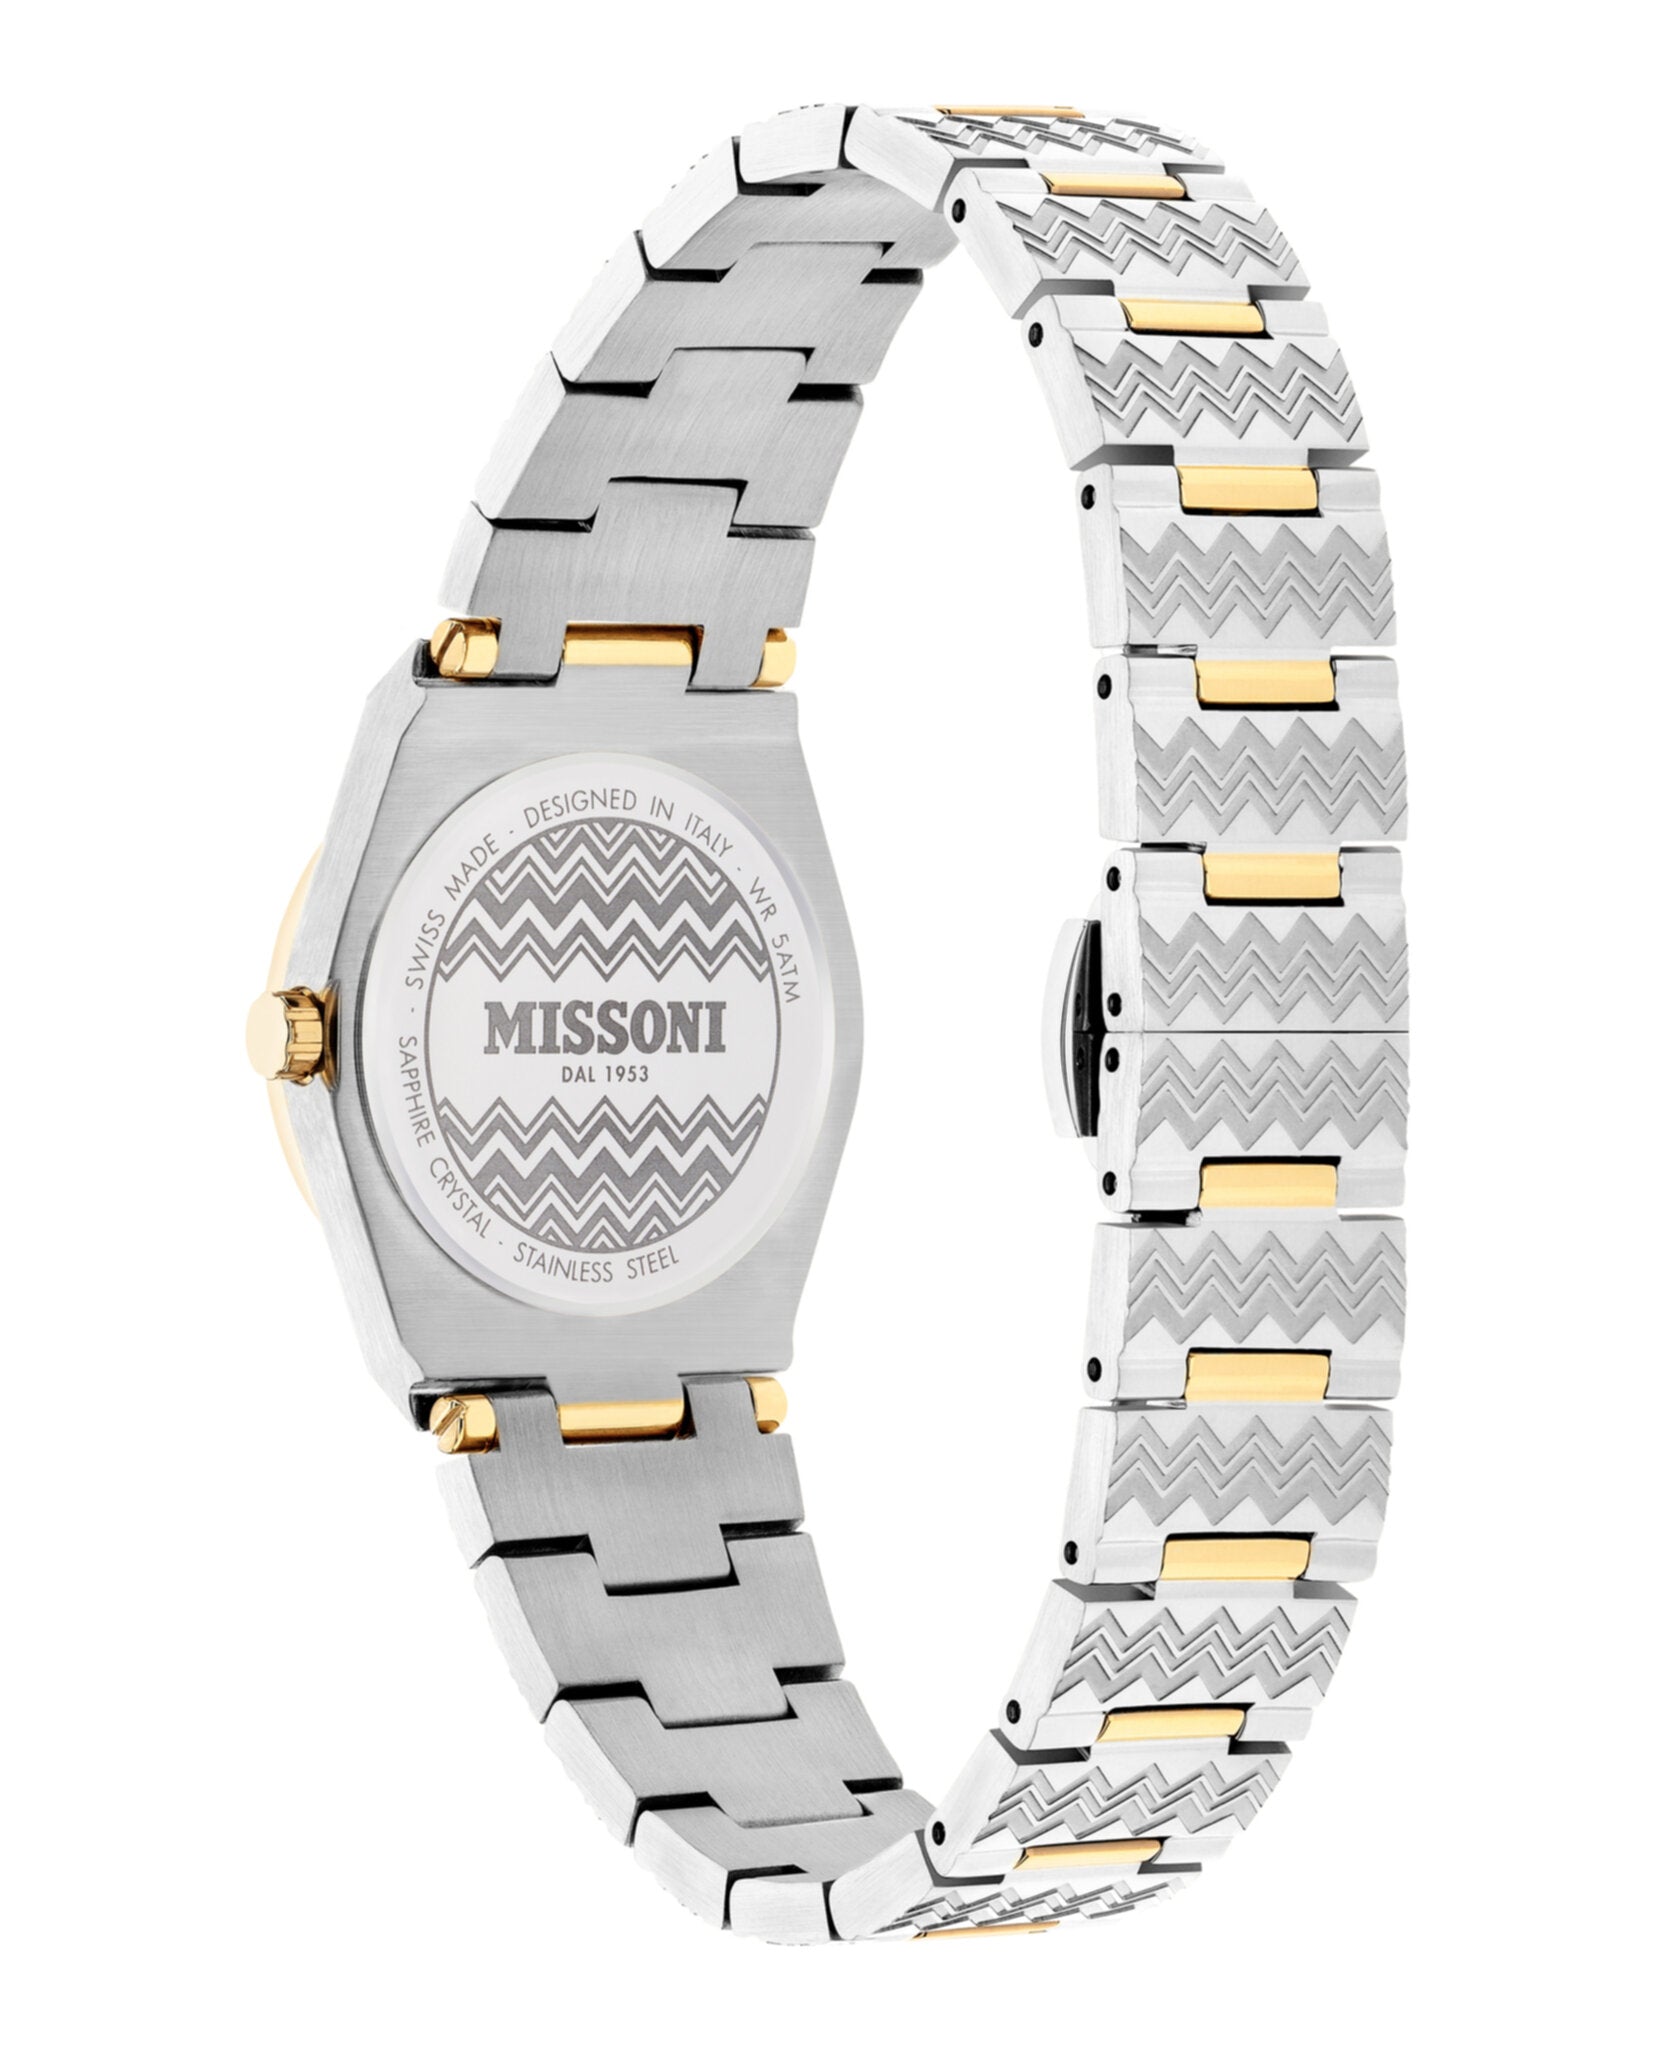 Milano Bracelet Watch